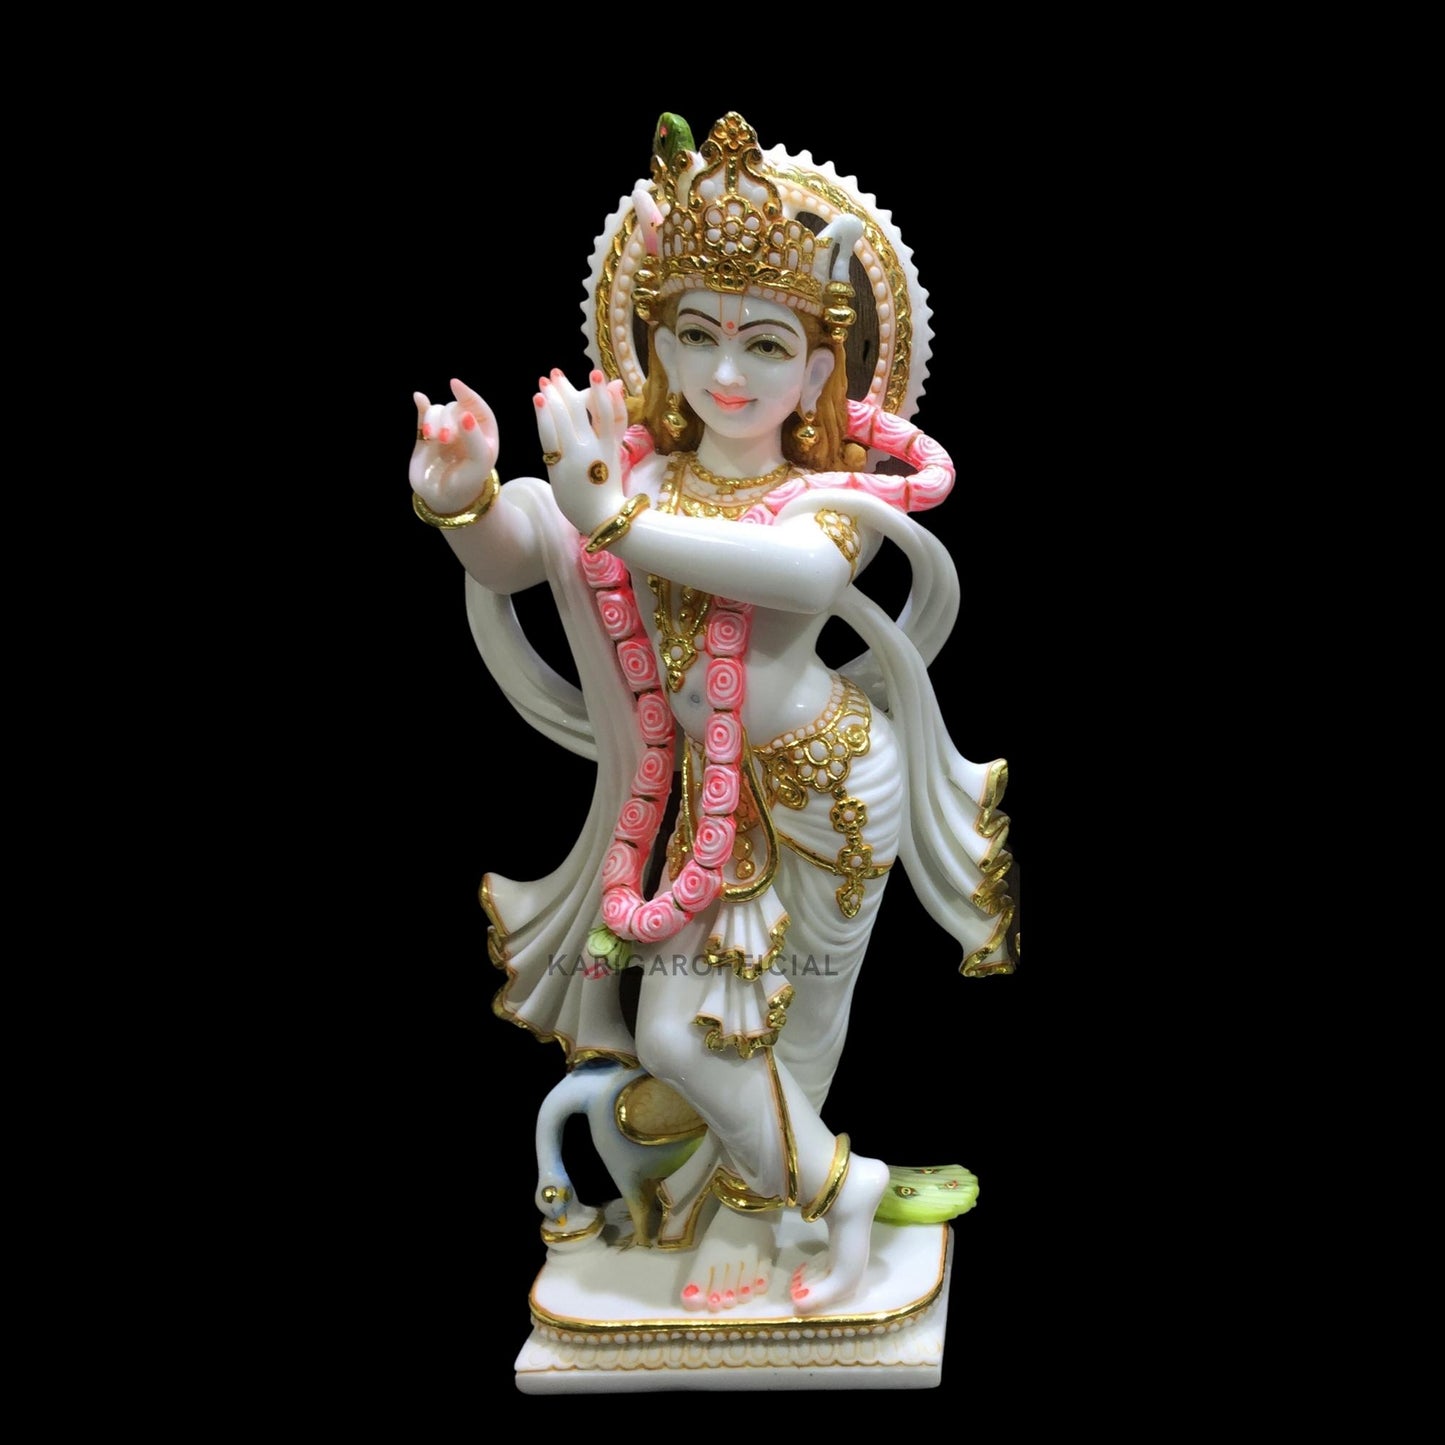 Radha Krishna Statue, Gold Leaf Work Figurine, Large 24 inches Marble Radha Krishna idol, Hindu Divine Couple Handpainted Murti, Home Temple Pooja Decoration, Wedding Housewarming Gifts Sculpture